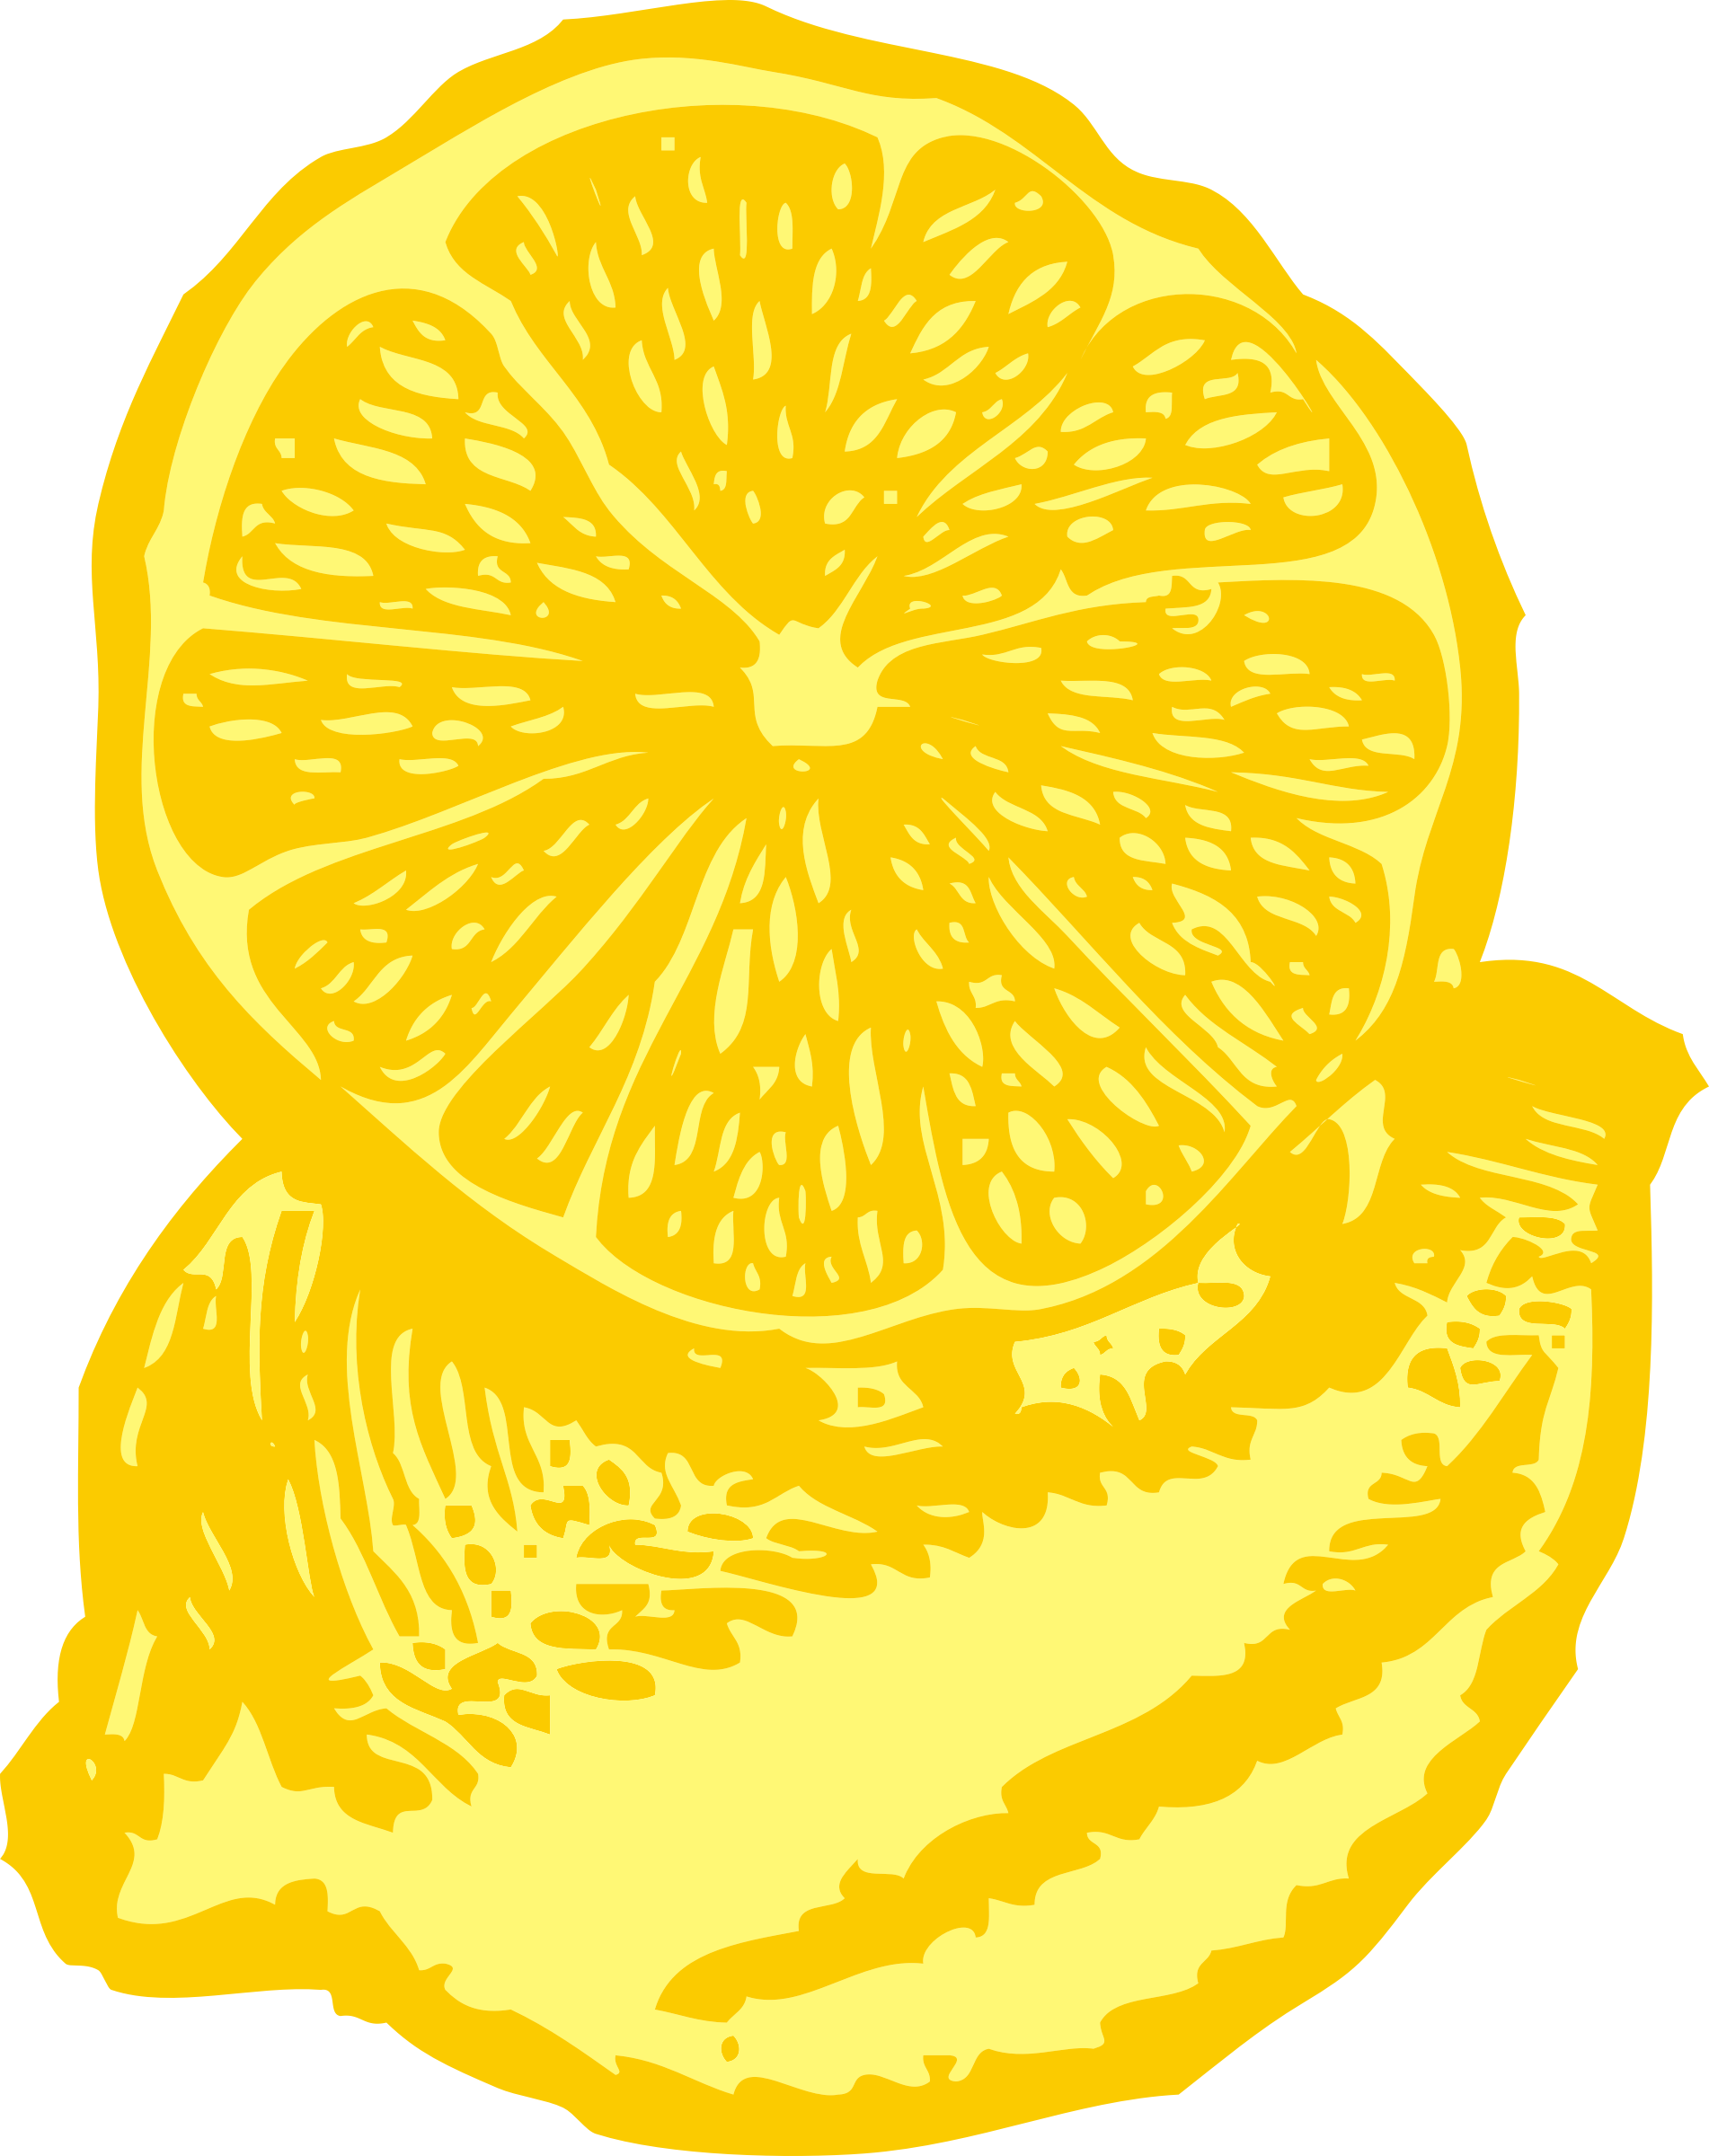 Lemons clipart yellow object. Lemon image id png